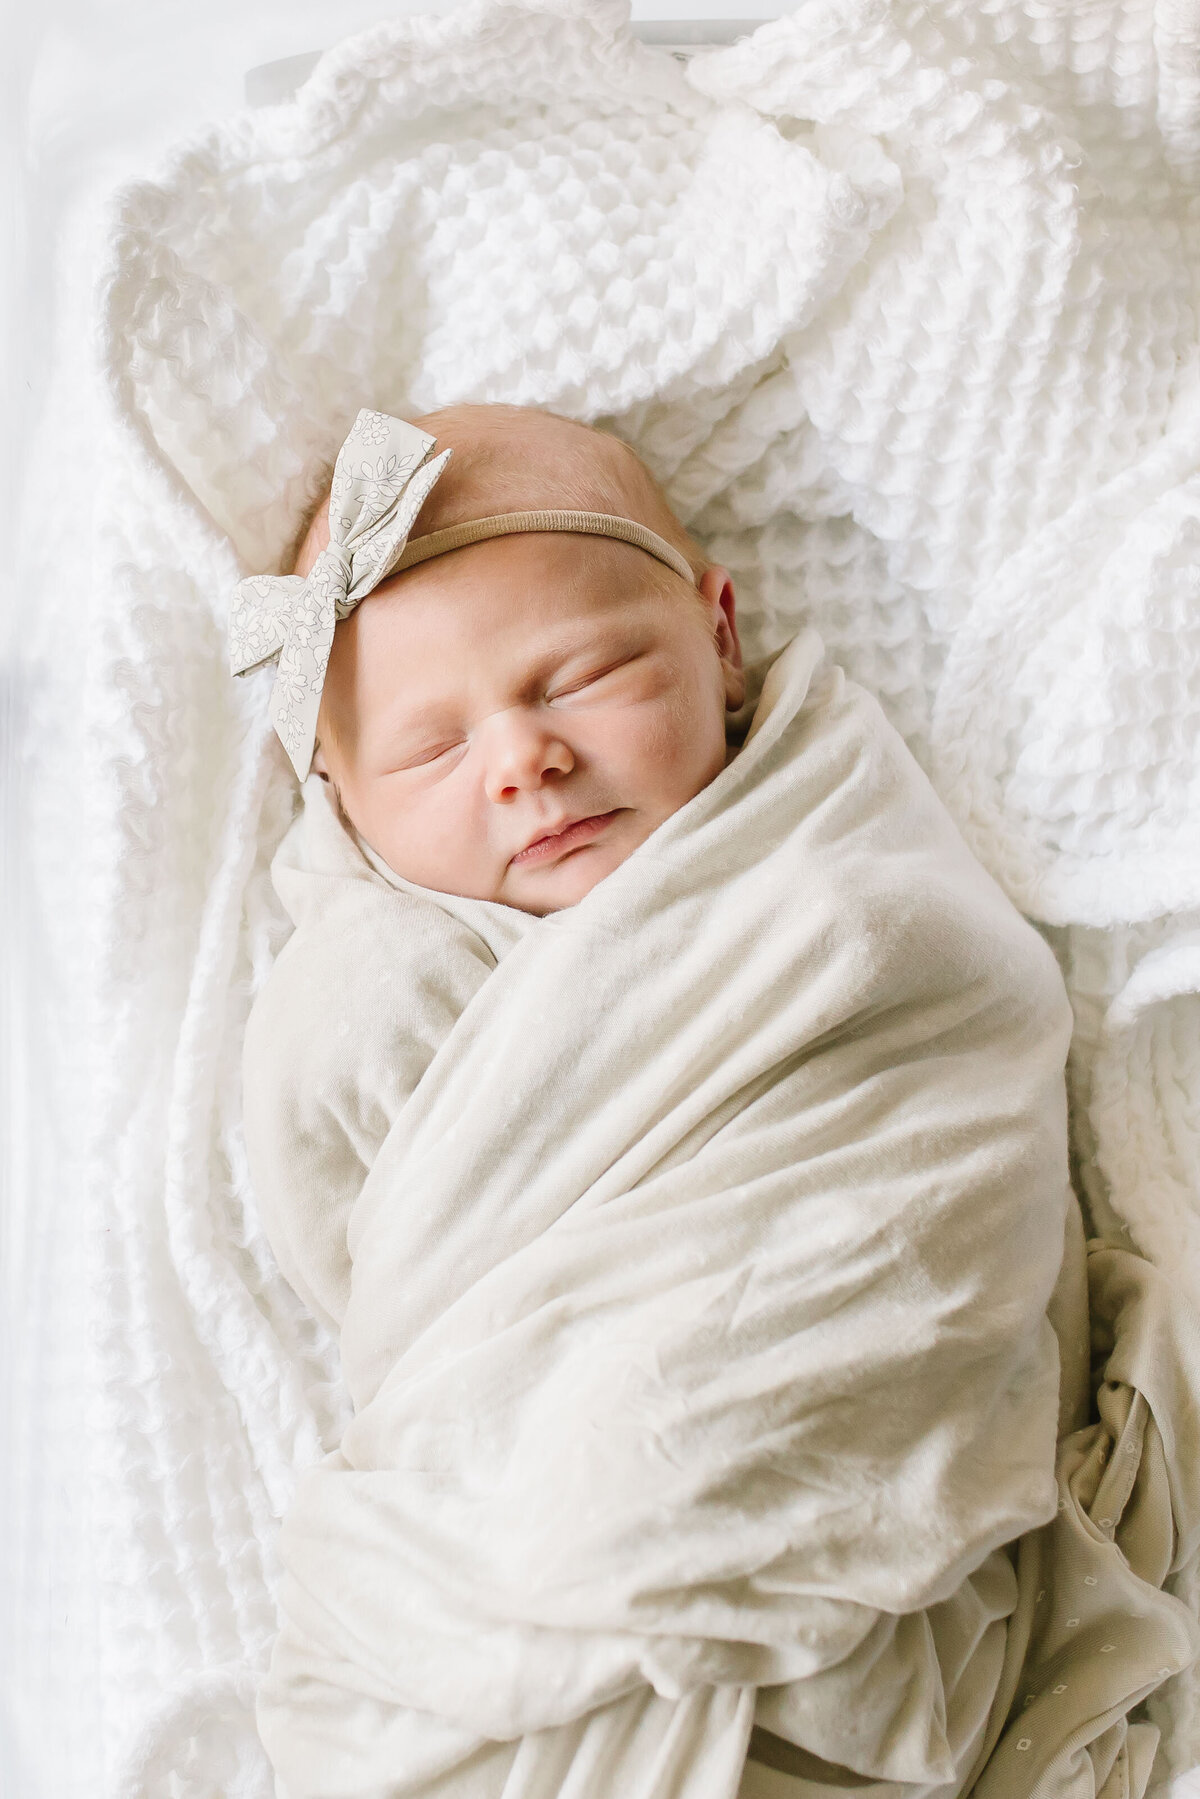 newborn baby born in northern virginia sleeping in hospital